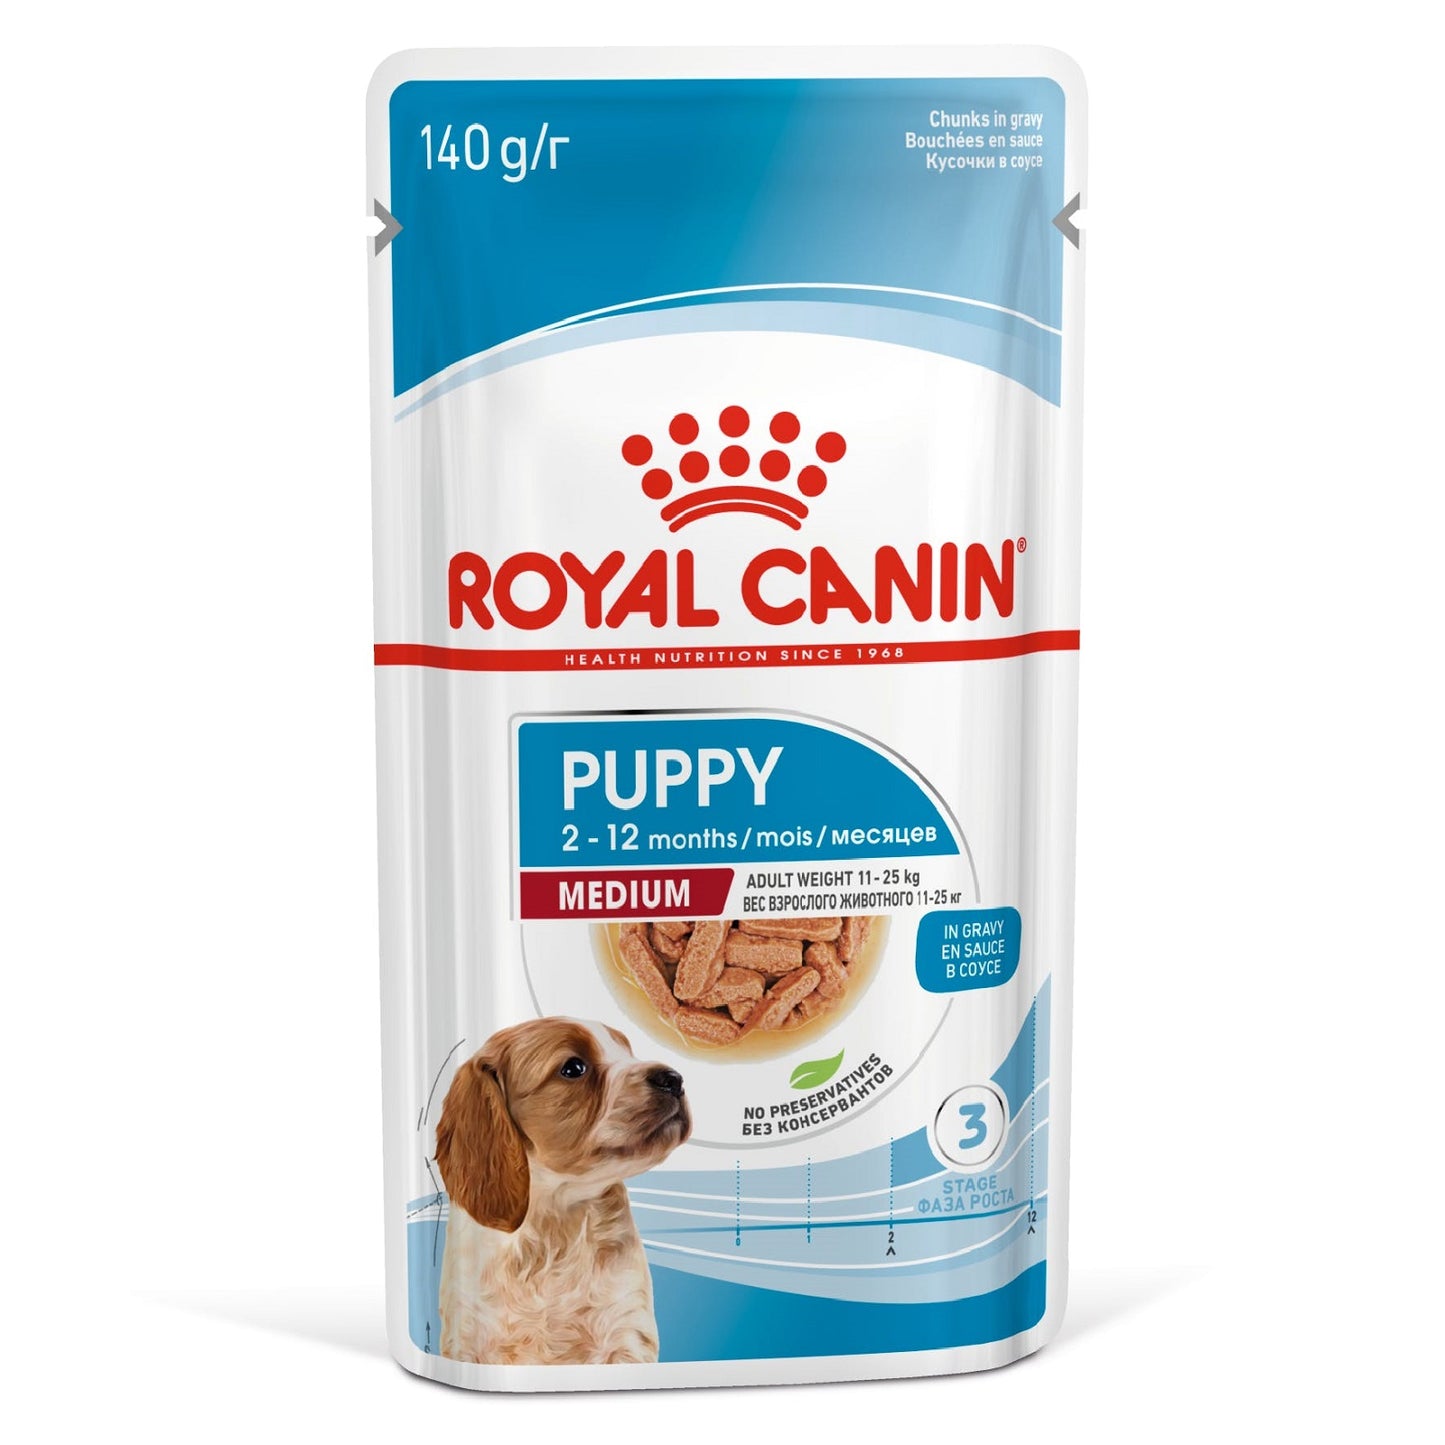 ROYAL CANIN - Medium Puppy Pouches (10 x 140g)